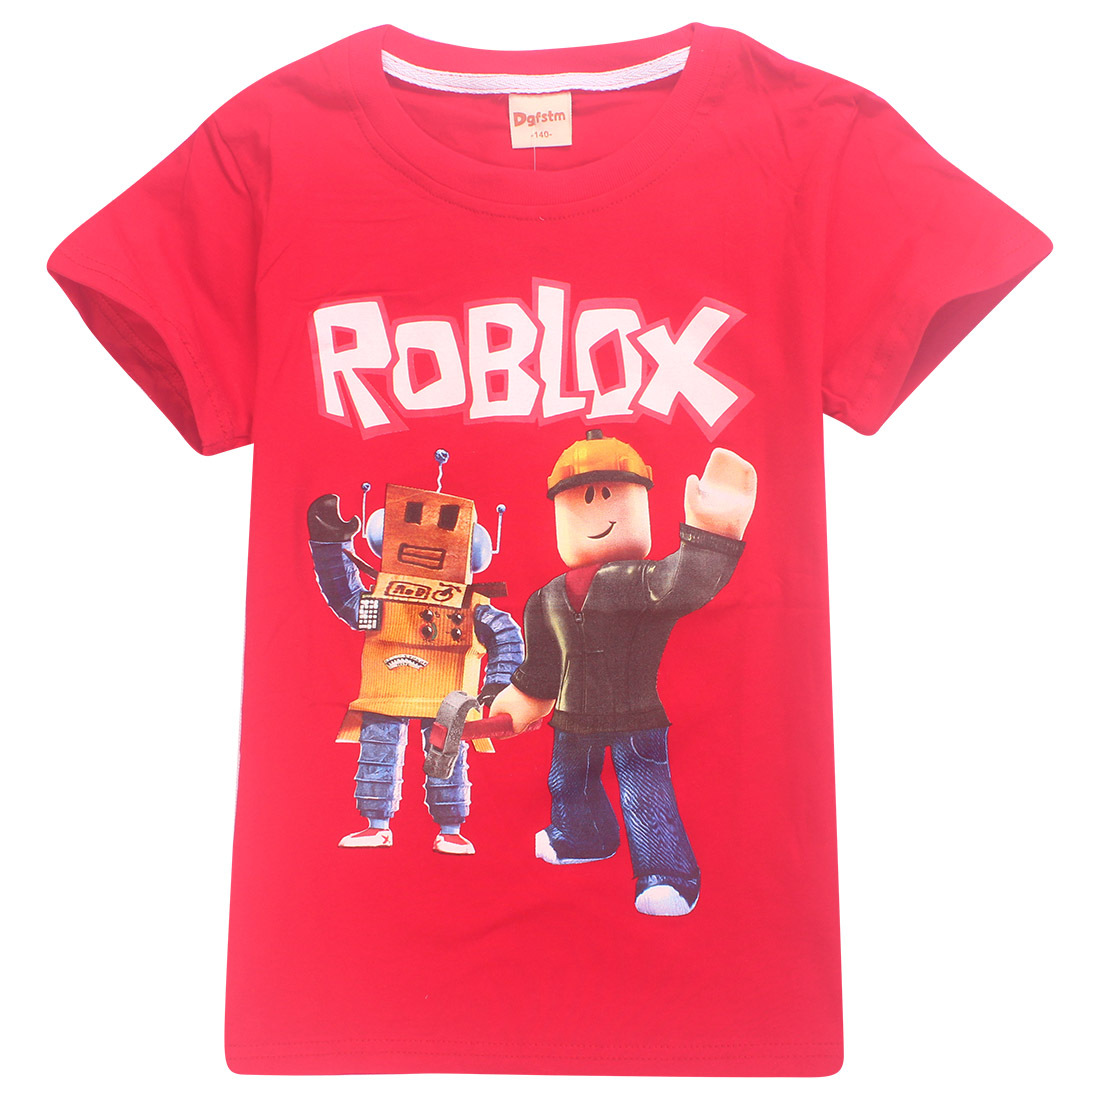 Roblox Demon Slayer Shirt